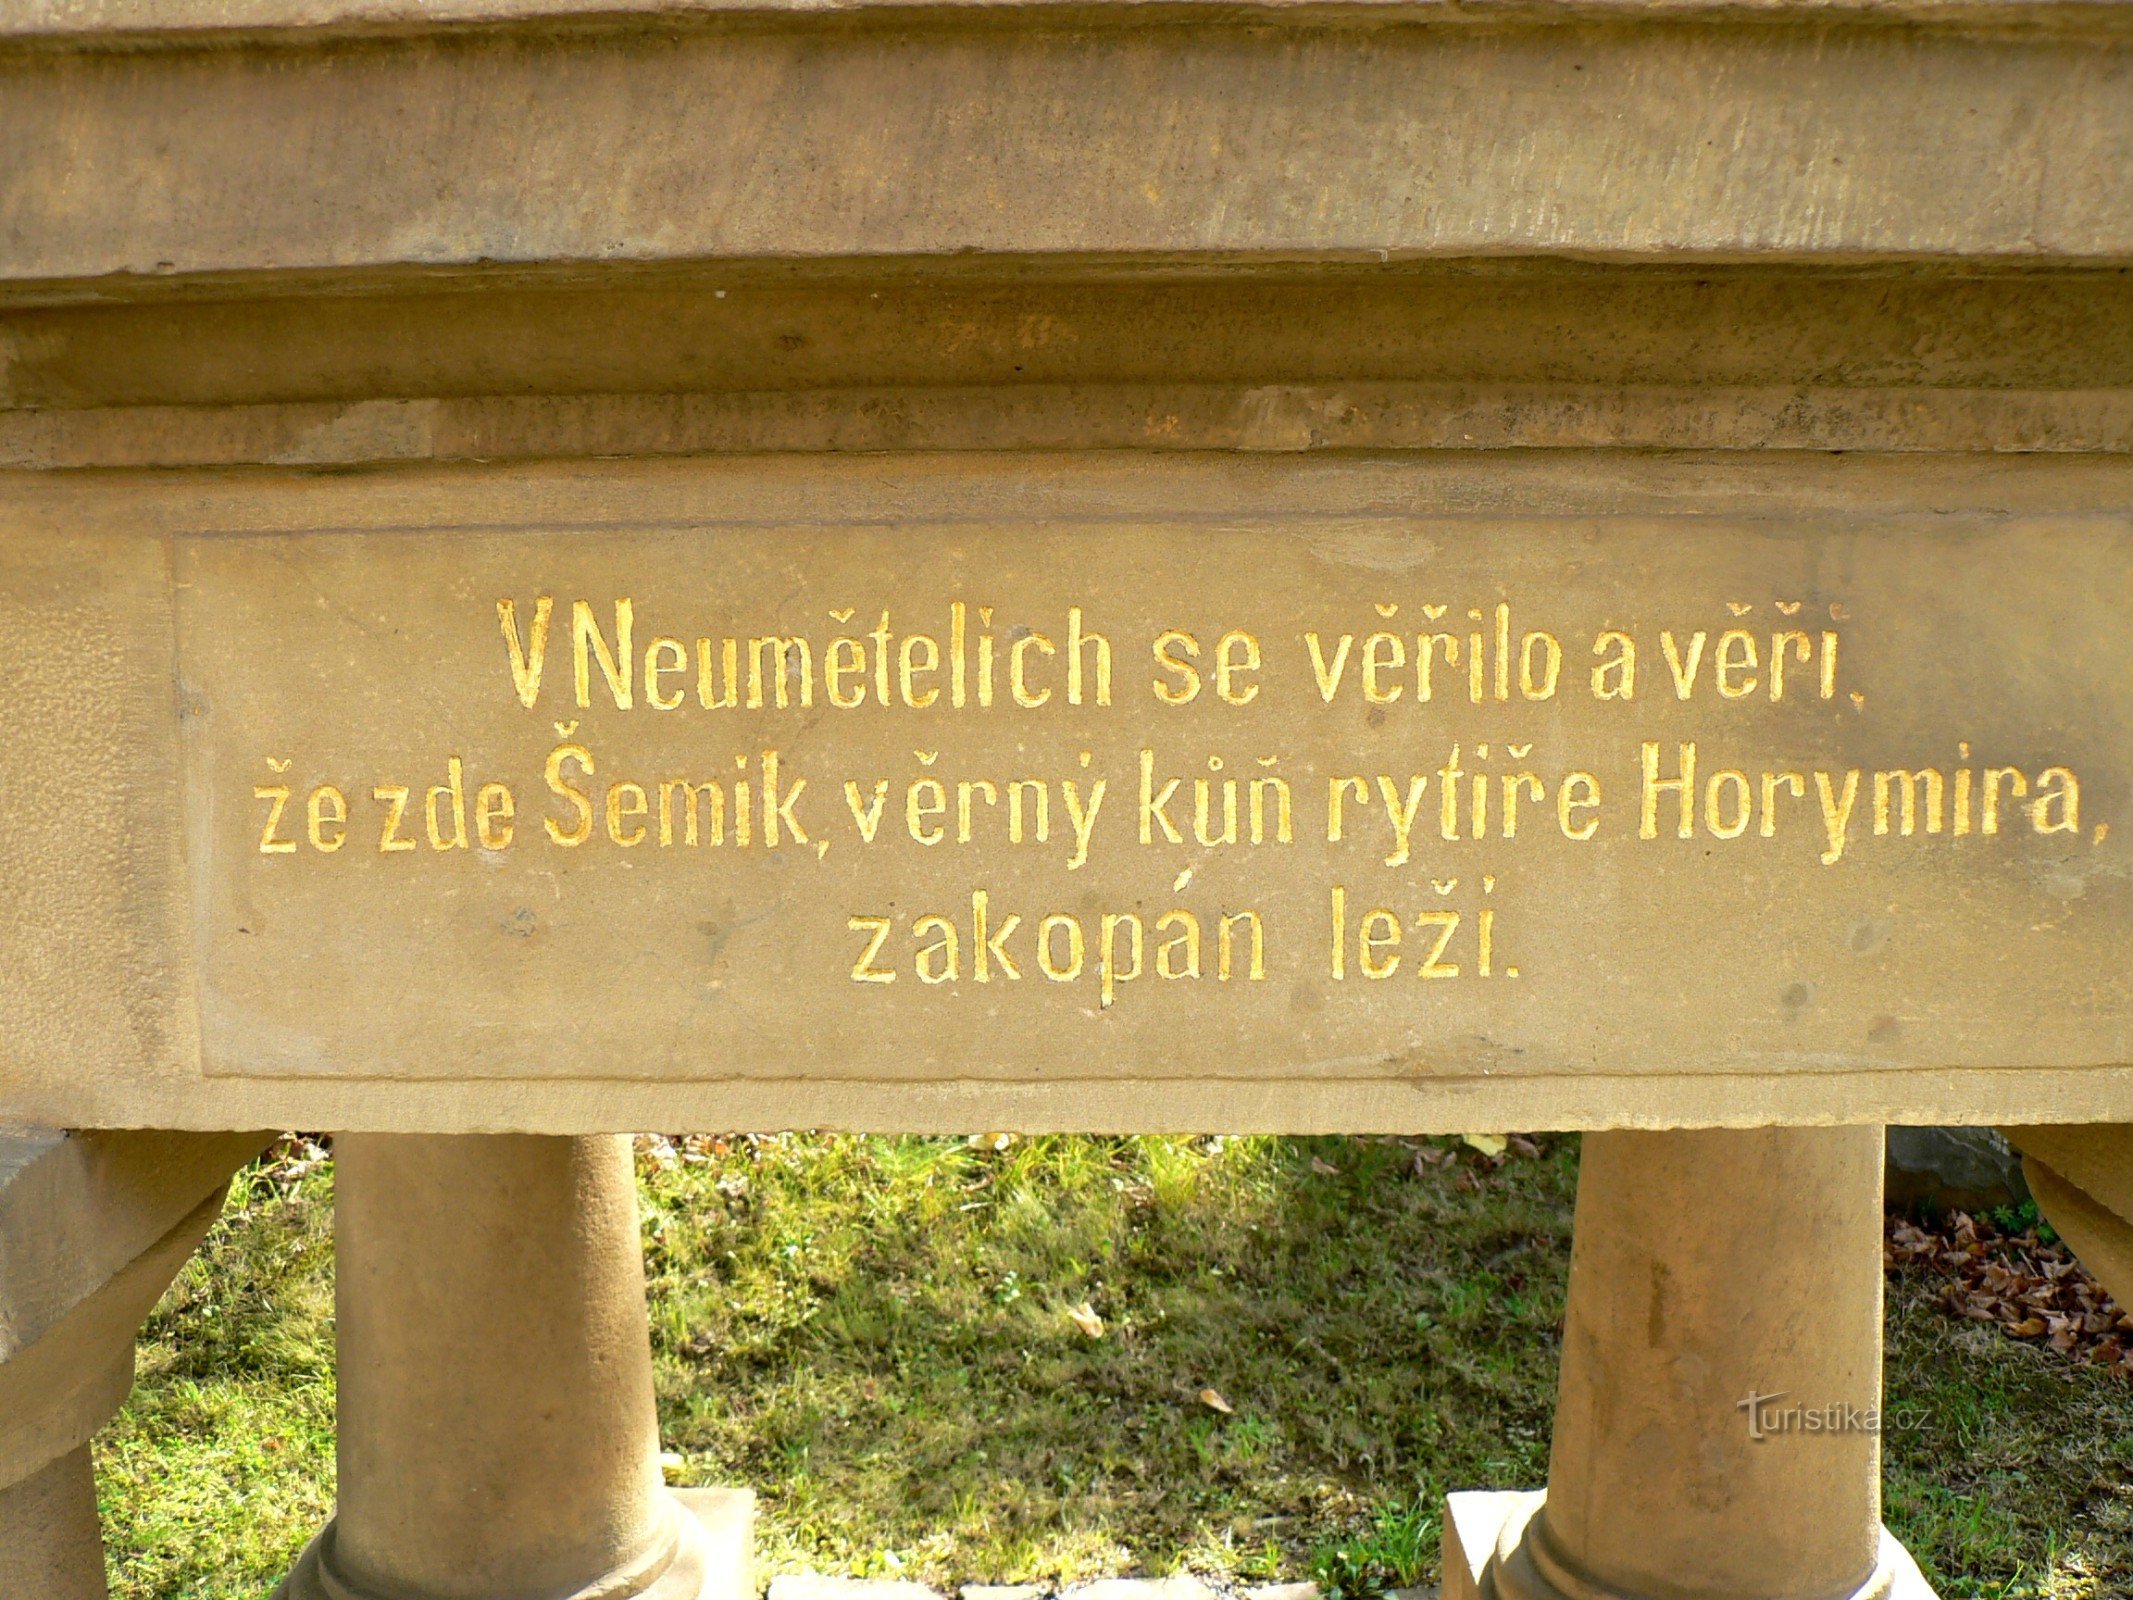 Neumetely - mormântul legendarului Šemík